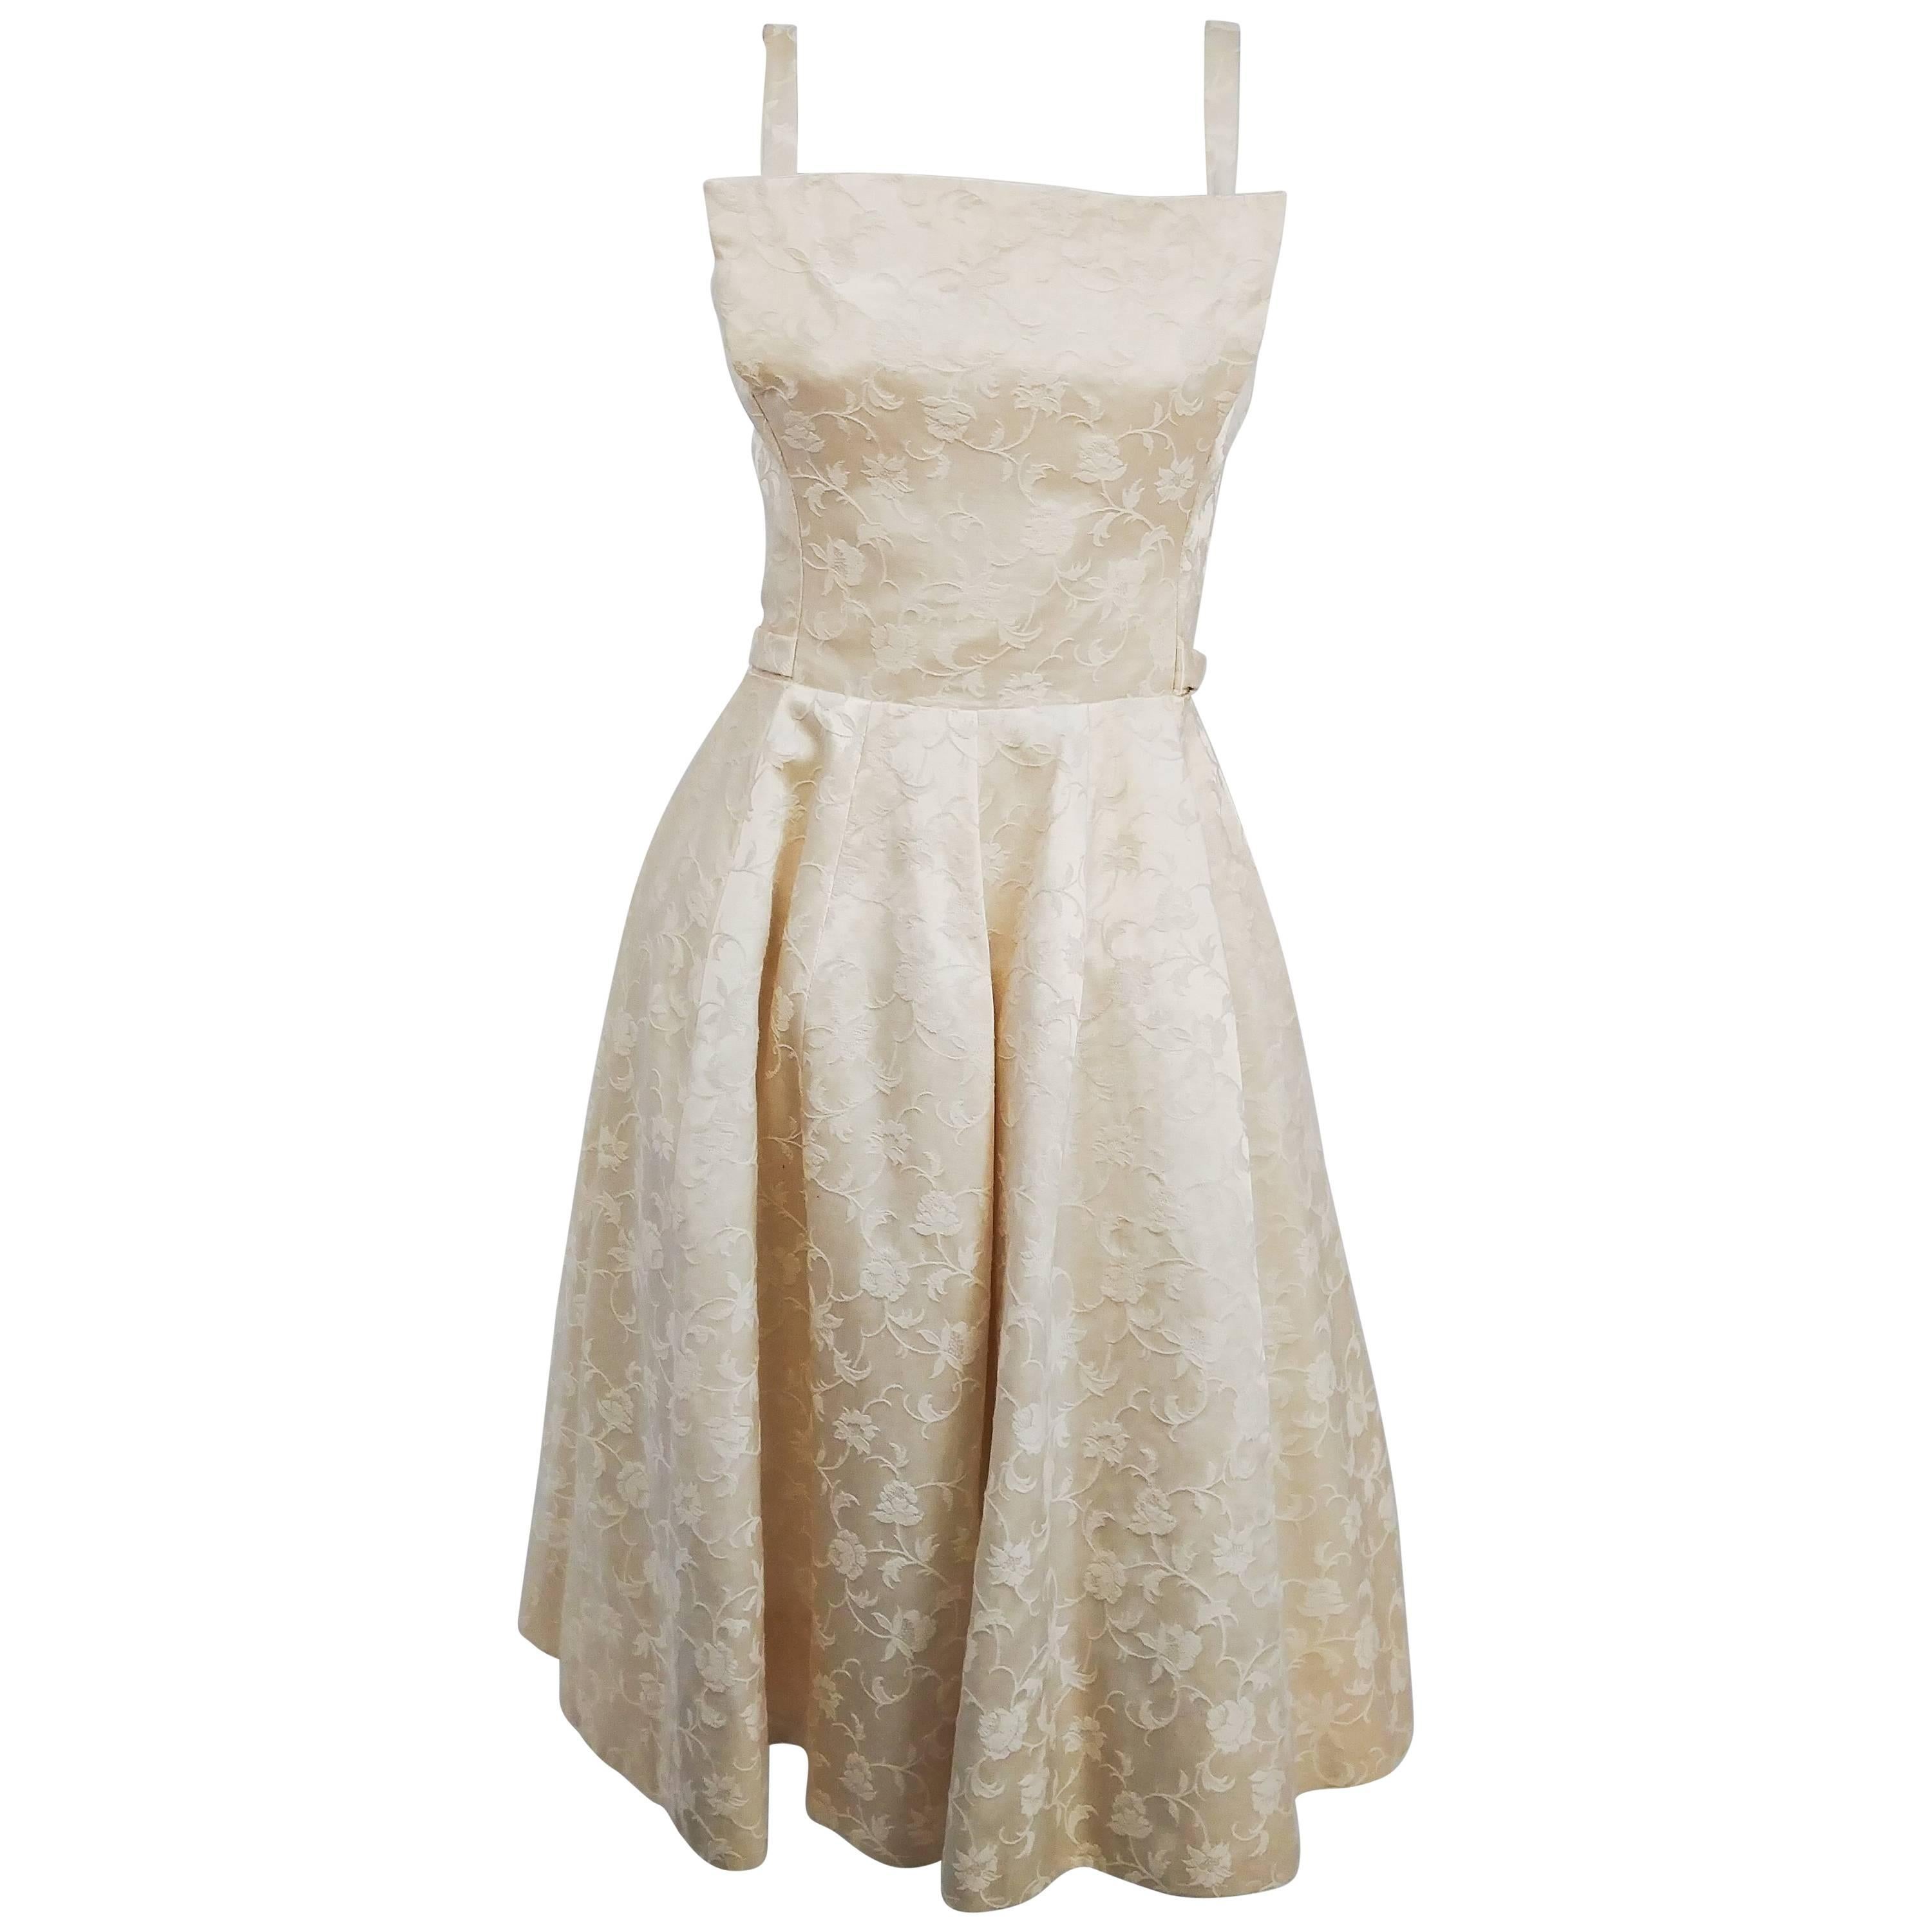 1950s White Jacquard Cocktail Dress